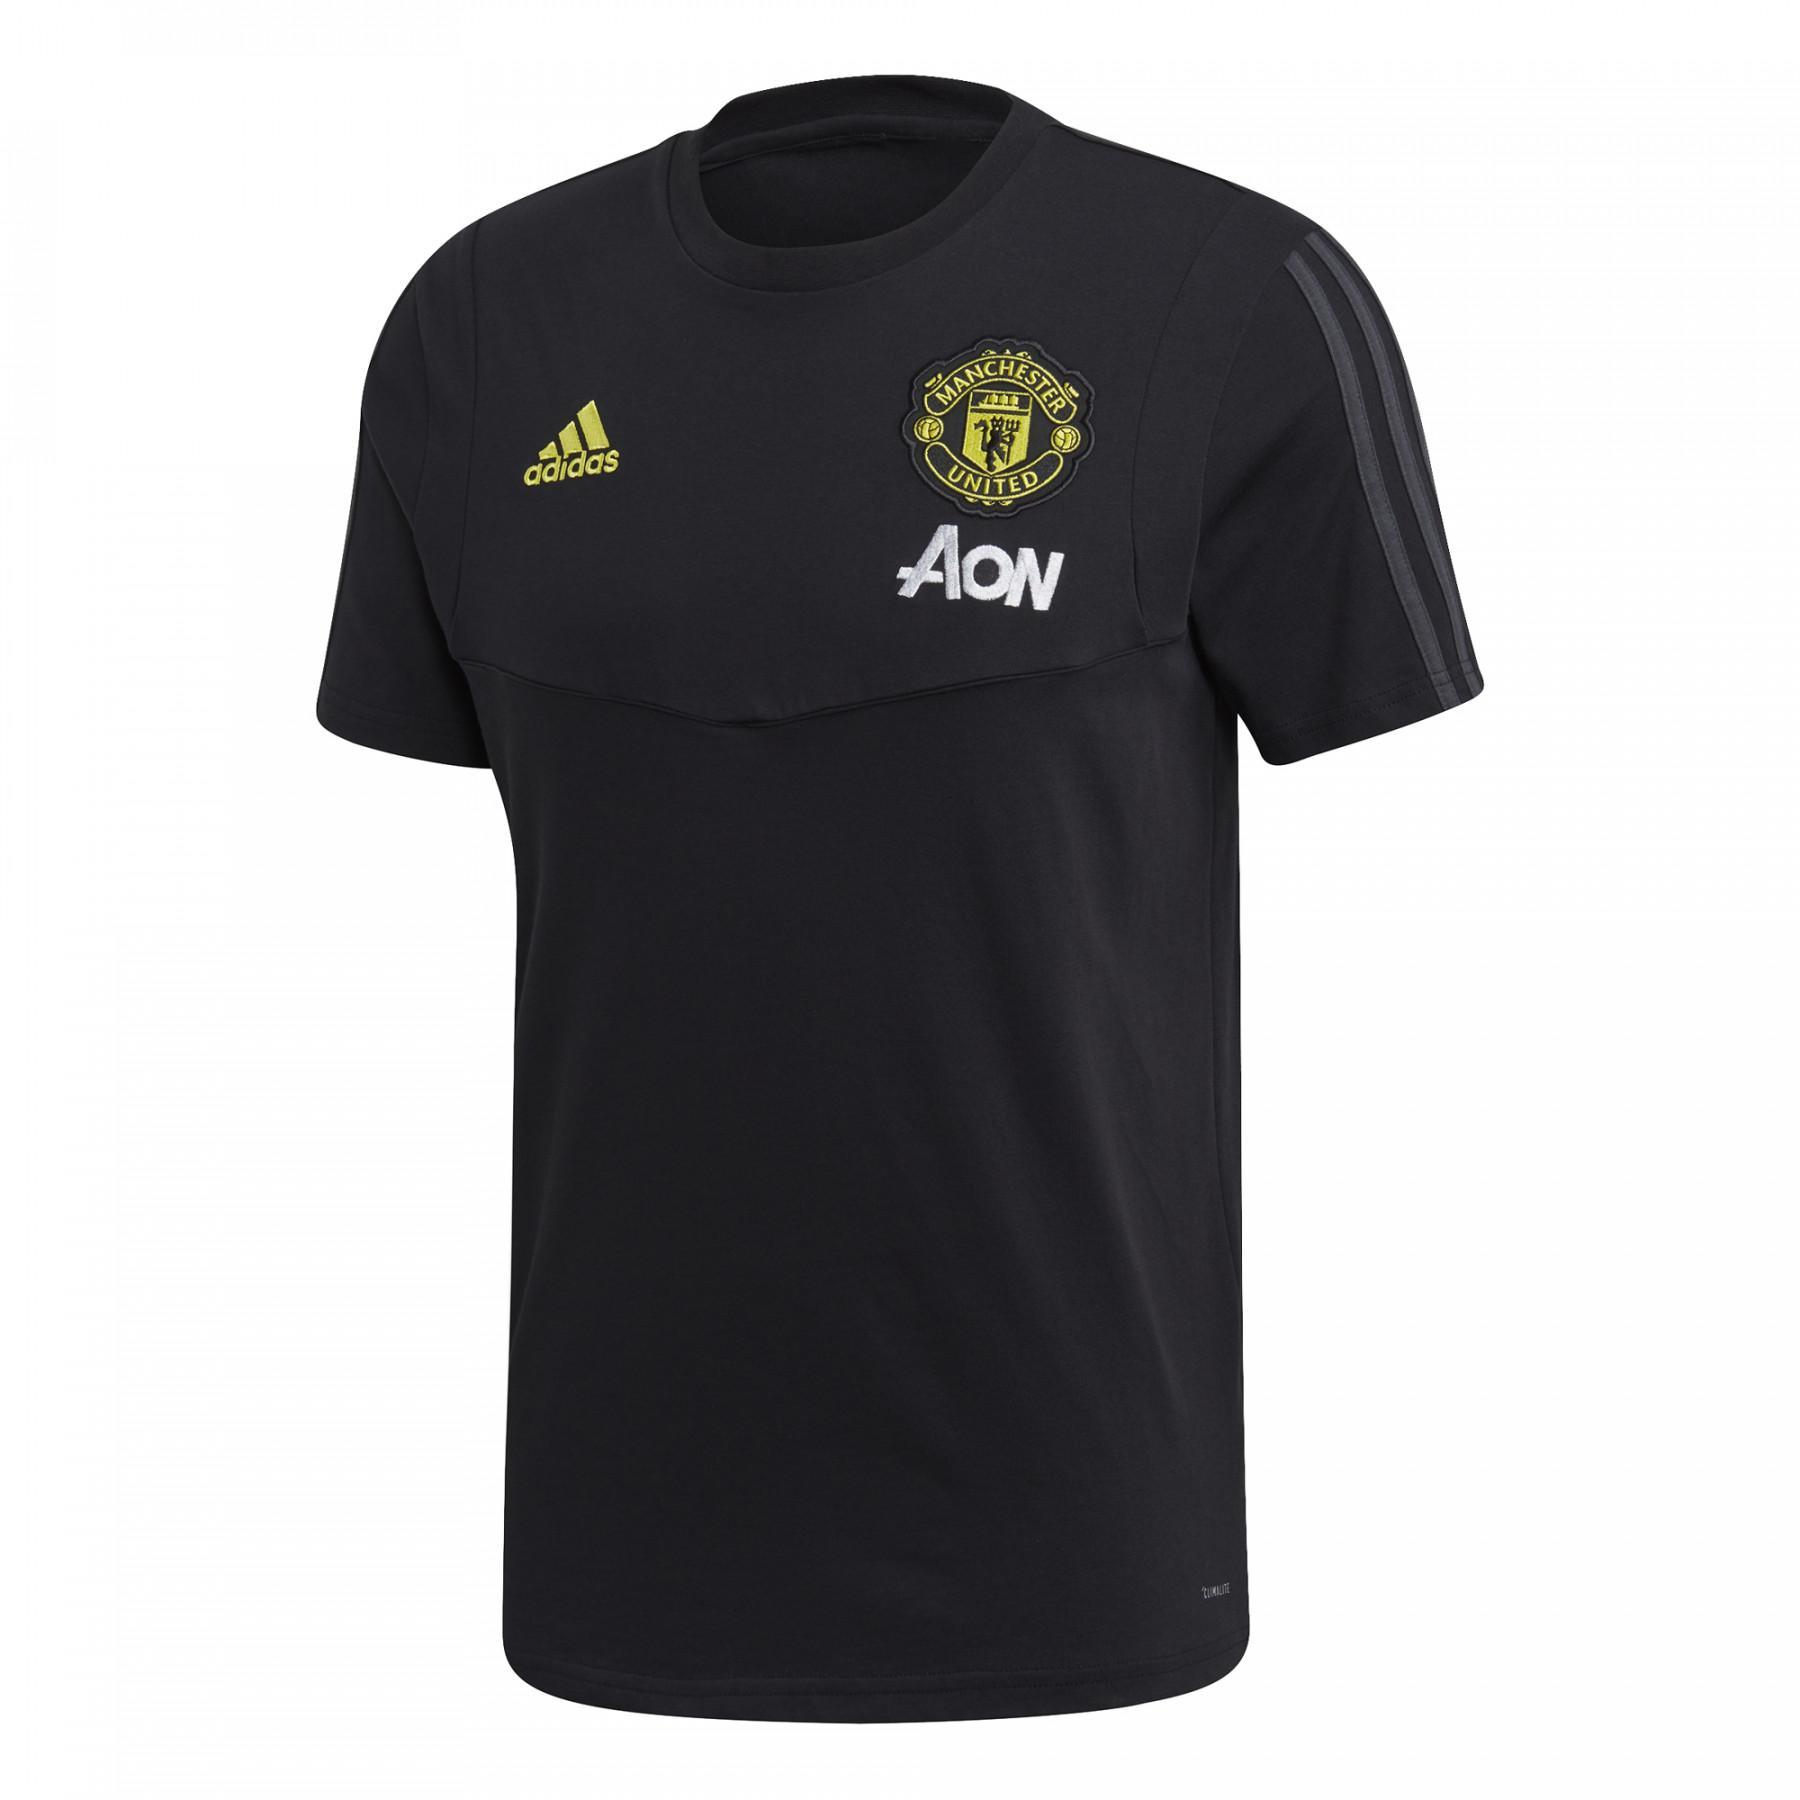 T-shirt Manchester United 2019/20